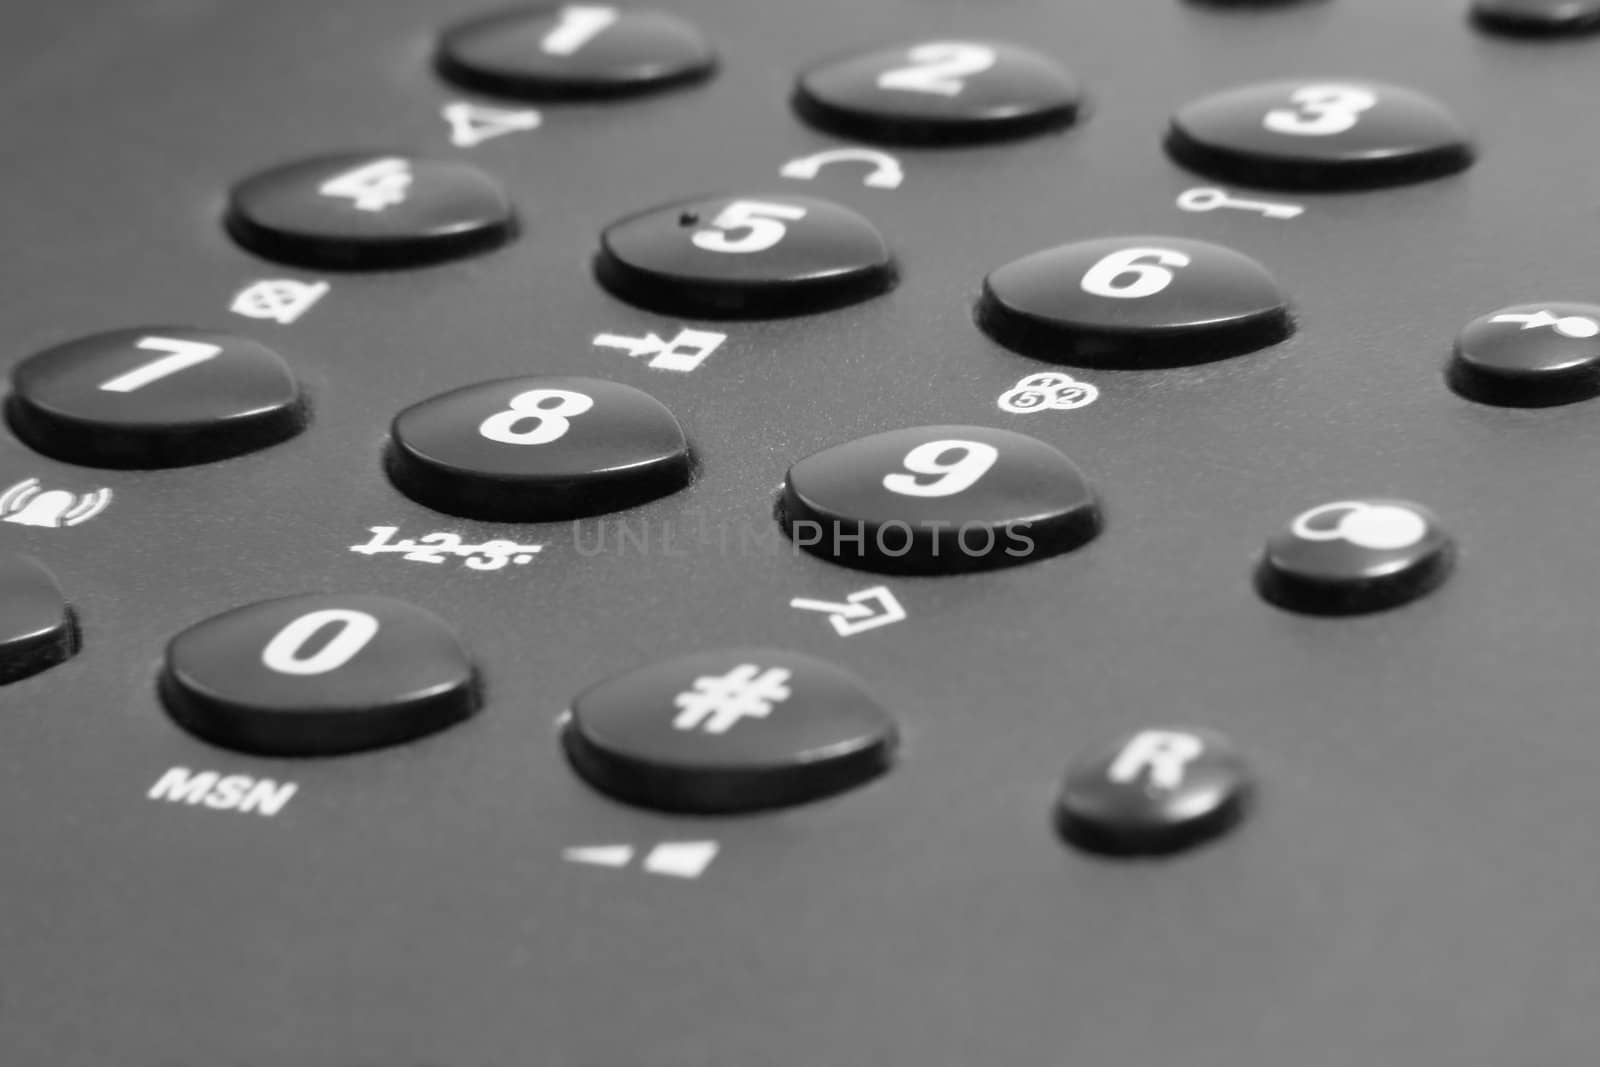 dark telephone keypad closeup with white numbers